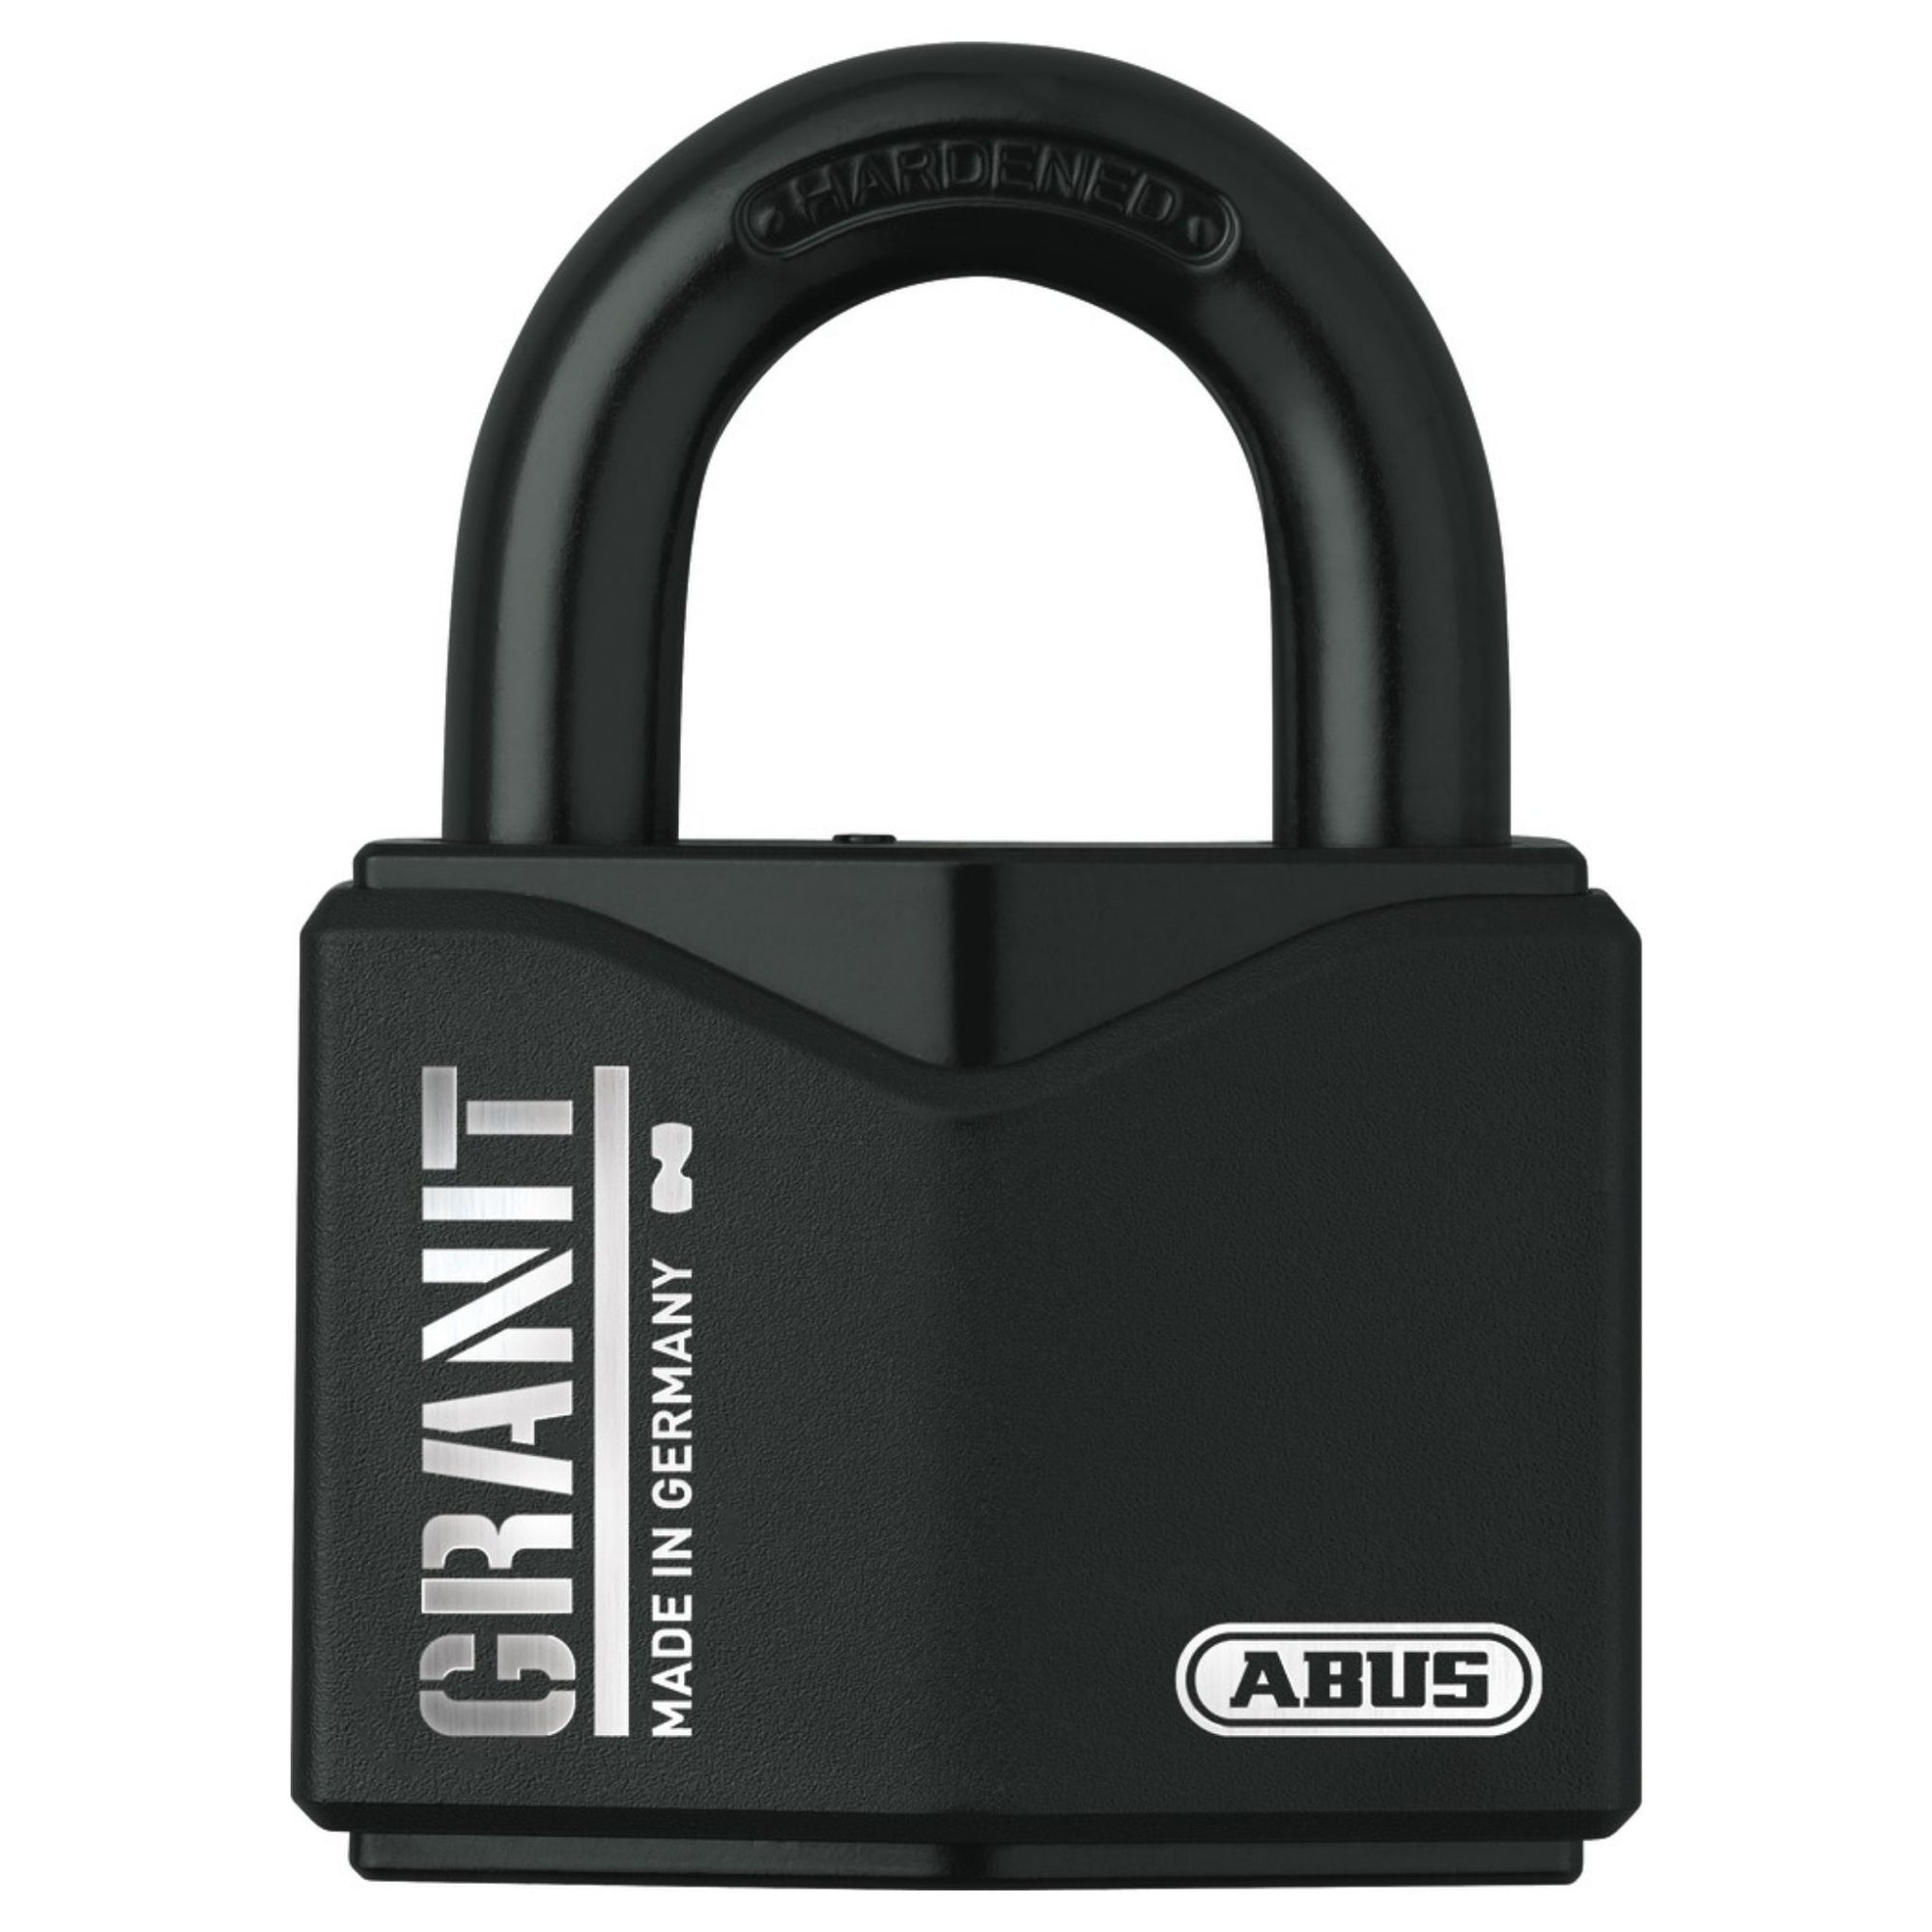 Abus 37RK/55 MK 0694 Granit Lock Master Keyed Black Granite Padlocks Match to Existing Key# MK0694 - The Lock Source